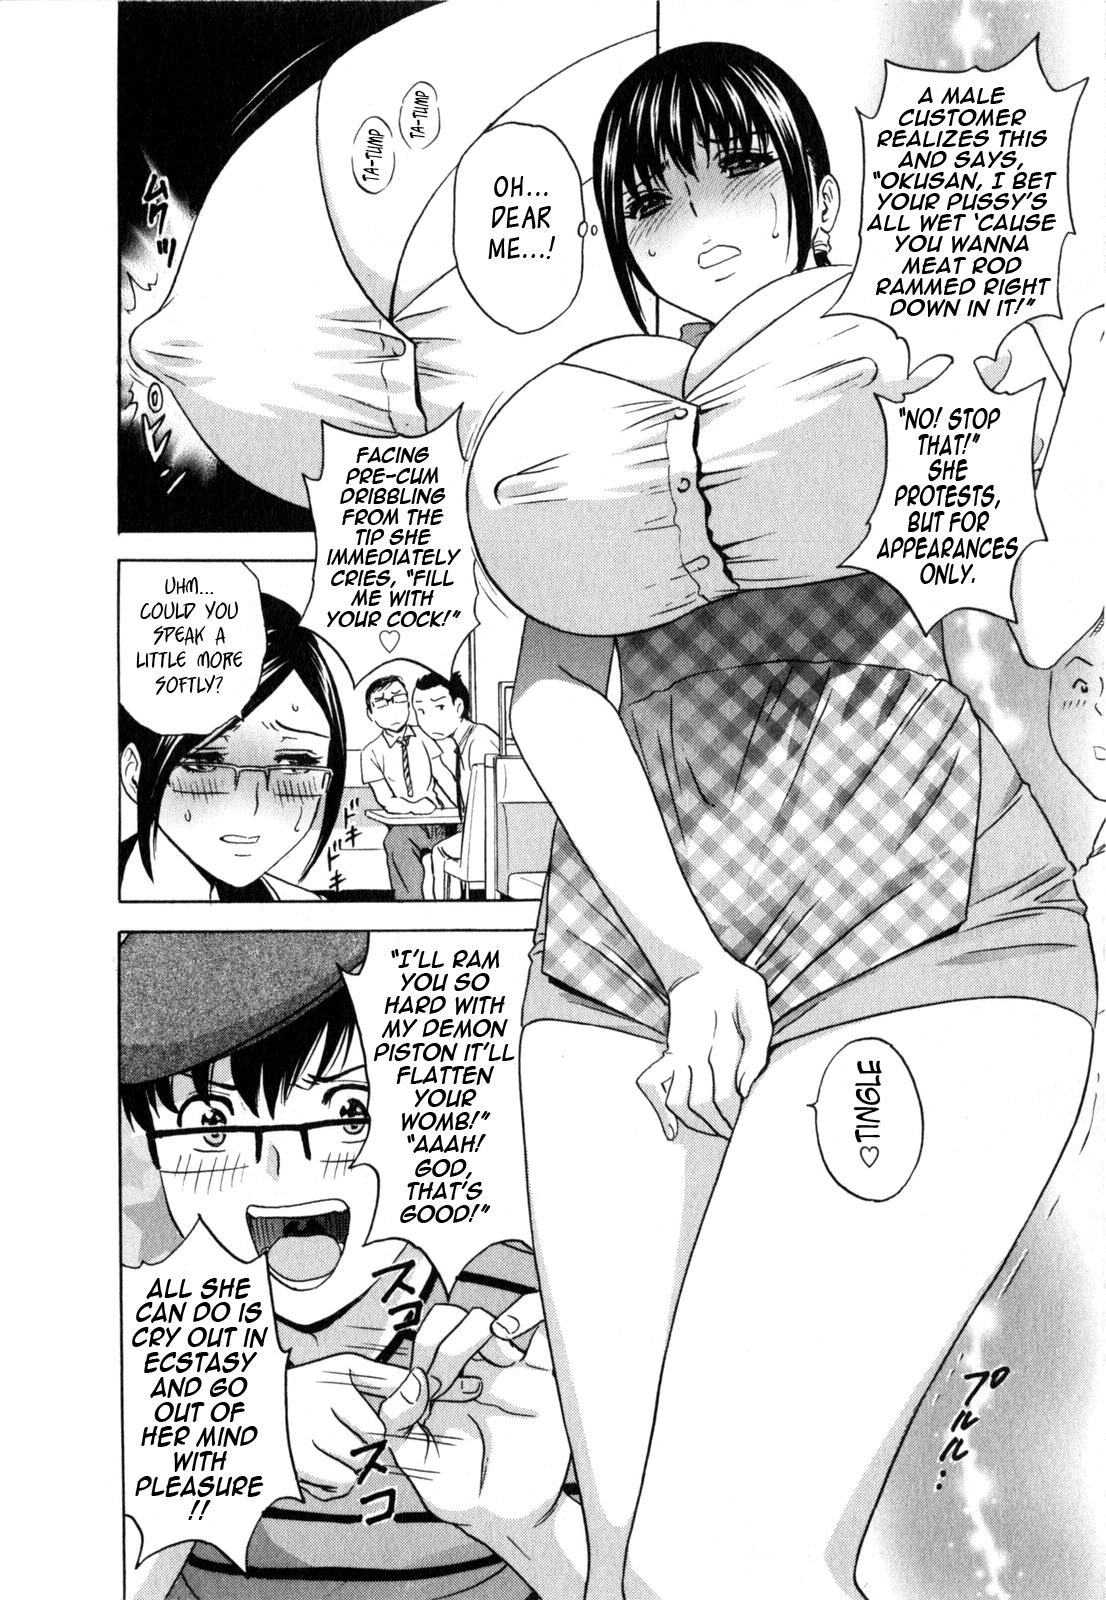 [Hidemaru] Life with Married Women Just Like a Manga 2 - Ch. 1-8 [English] {Tadanohito} 110